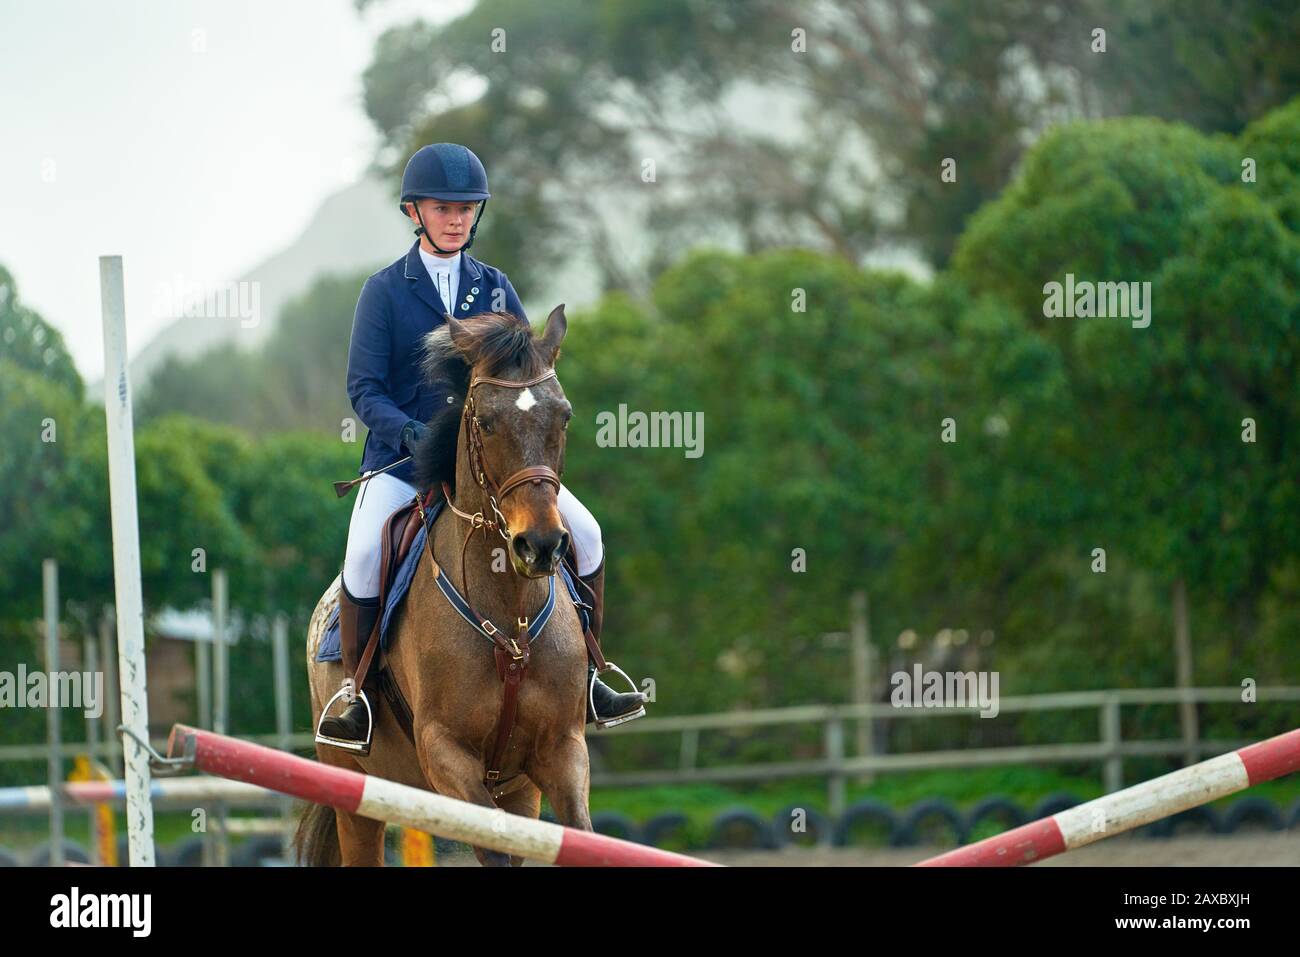 Teenage girl equestrian jumping Stock Photo